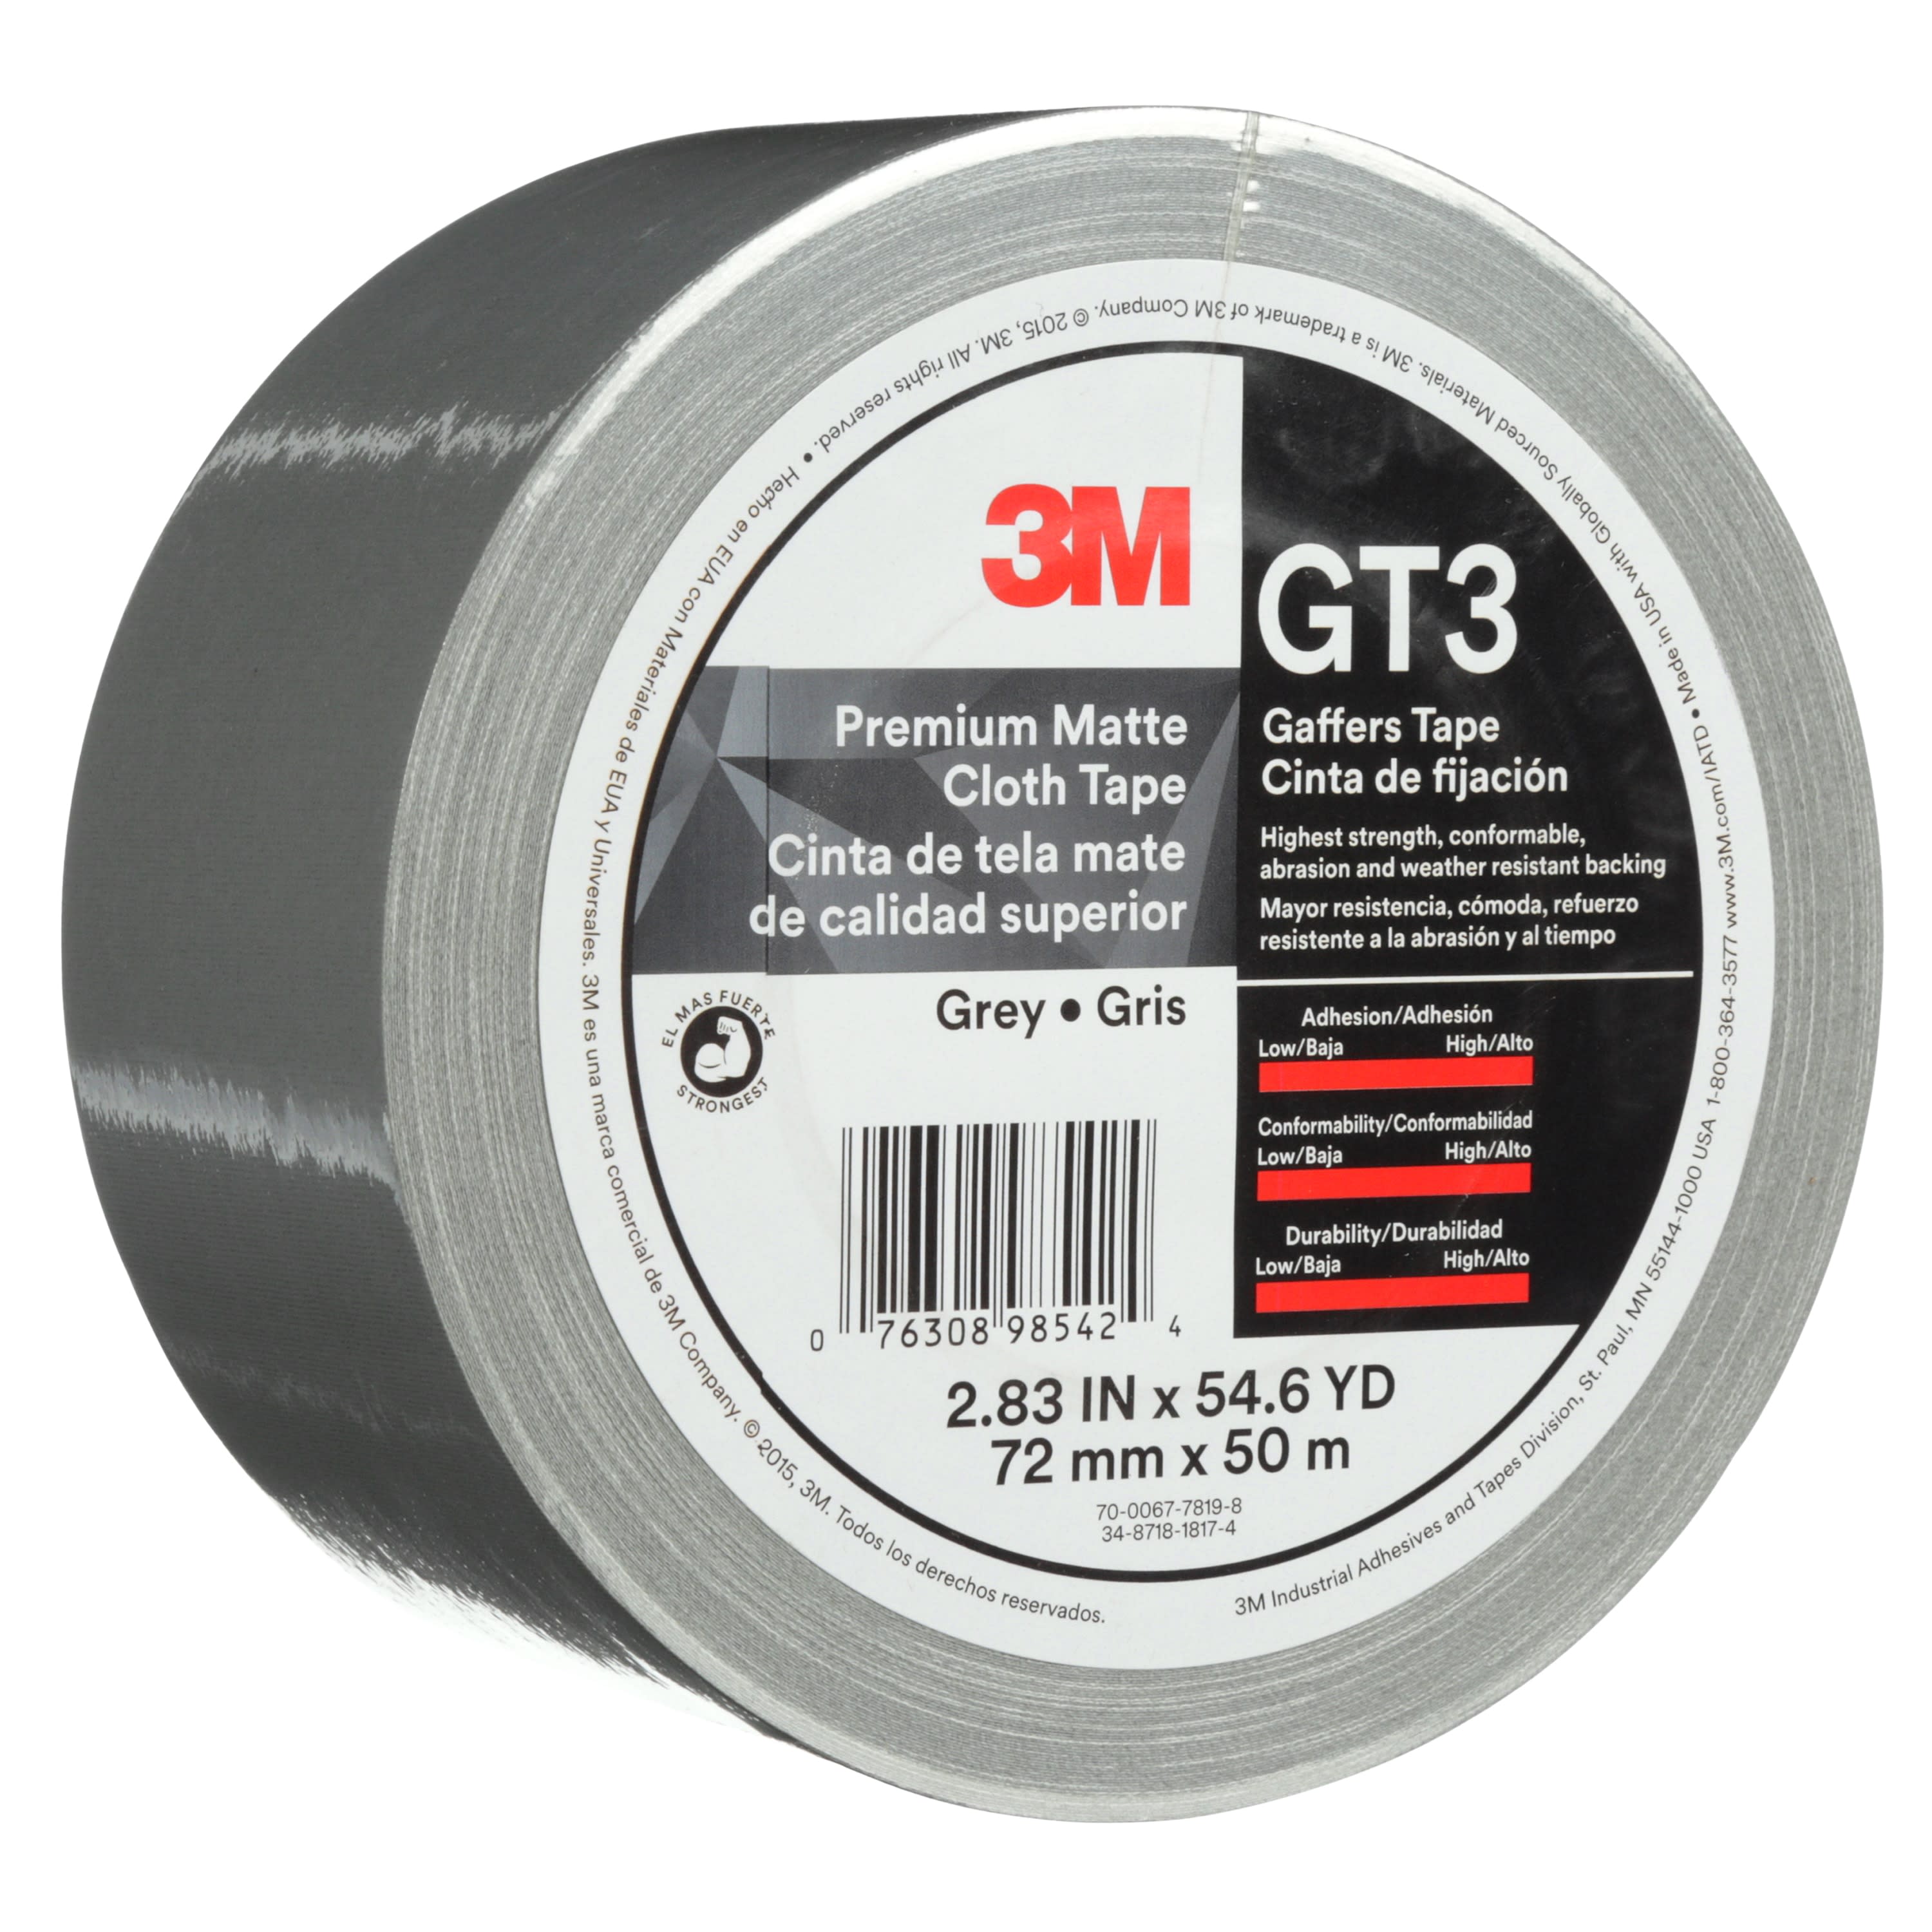 3M™ Premium Matte Cloth (Gaffers) Tape GT3, Gray, 72 mm x 50 m, 11 mil,
16 per case